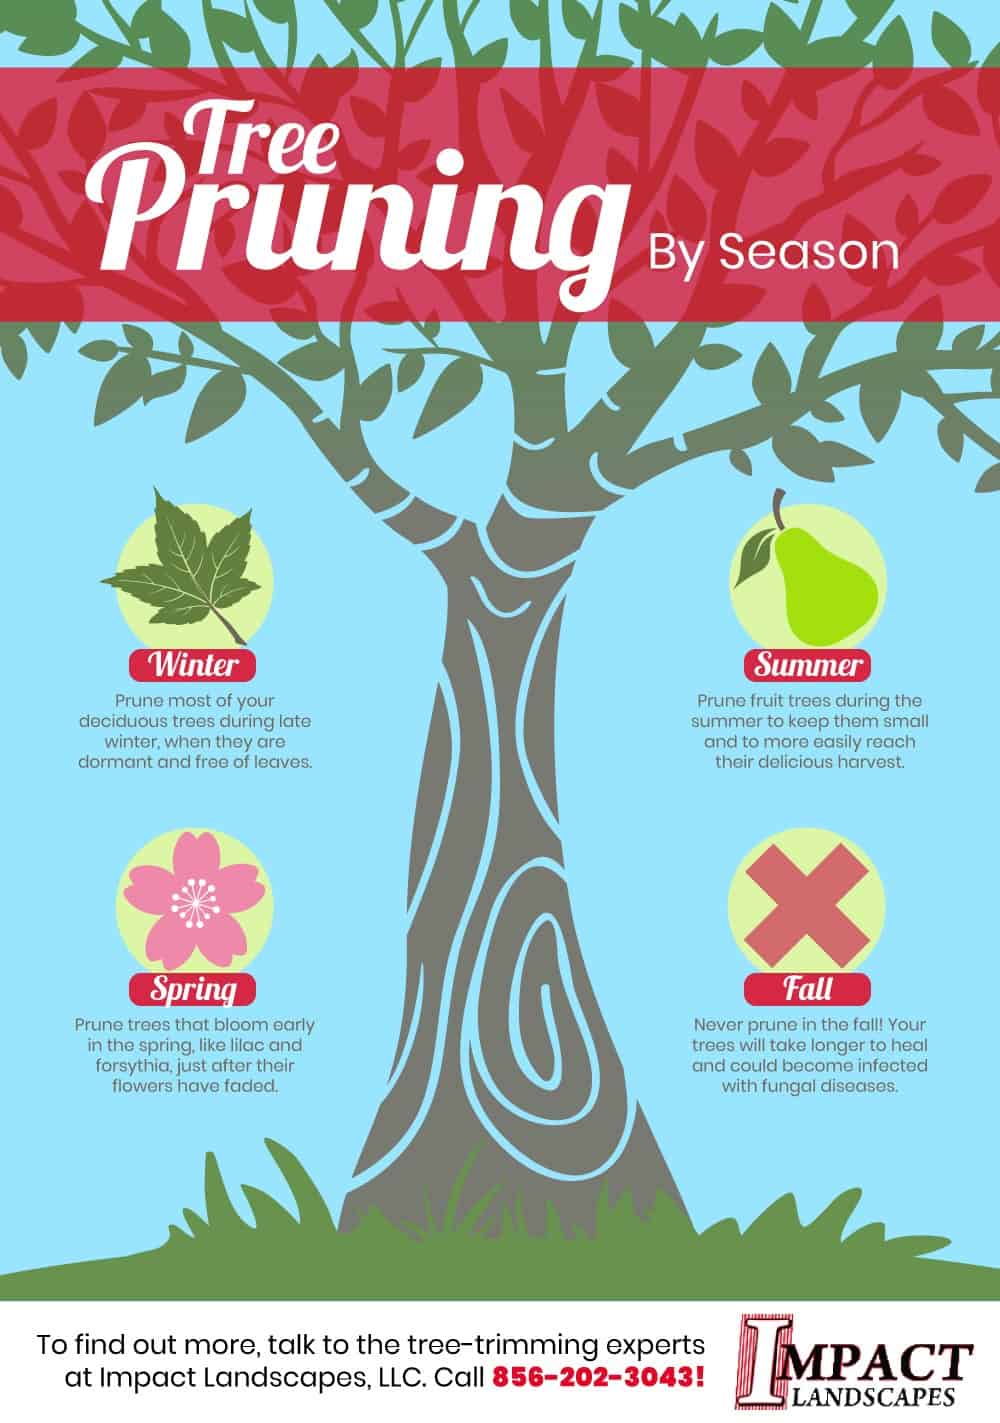 How to do tree pruning by season via Impact Landscapes #backyardLandscaping #backyardLandscapingIdeas #landscaping #backyard #outdoor #frontYard #cheapLandscapingIdeas #tree #pruning